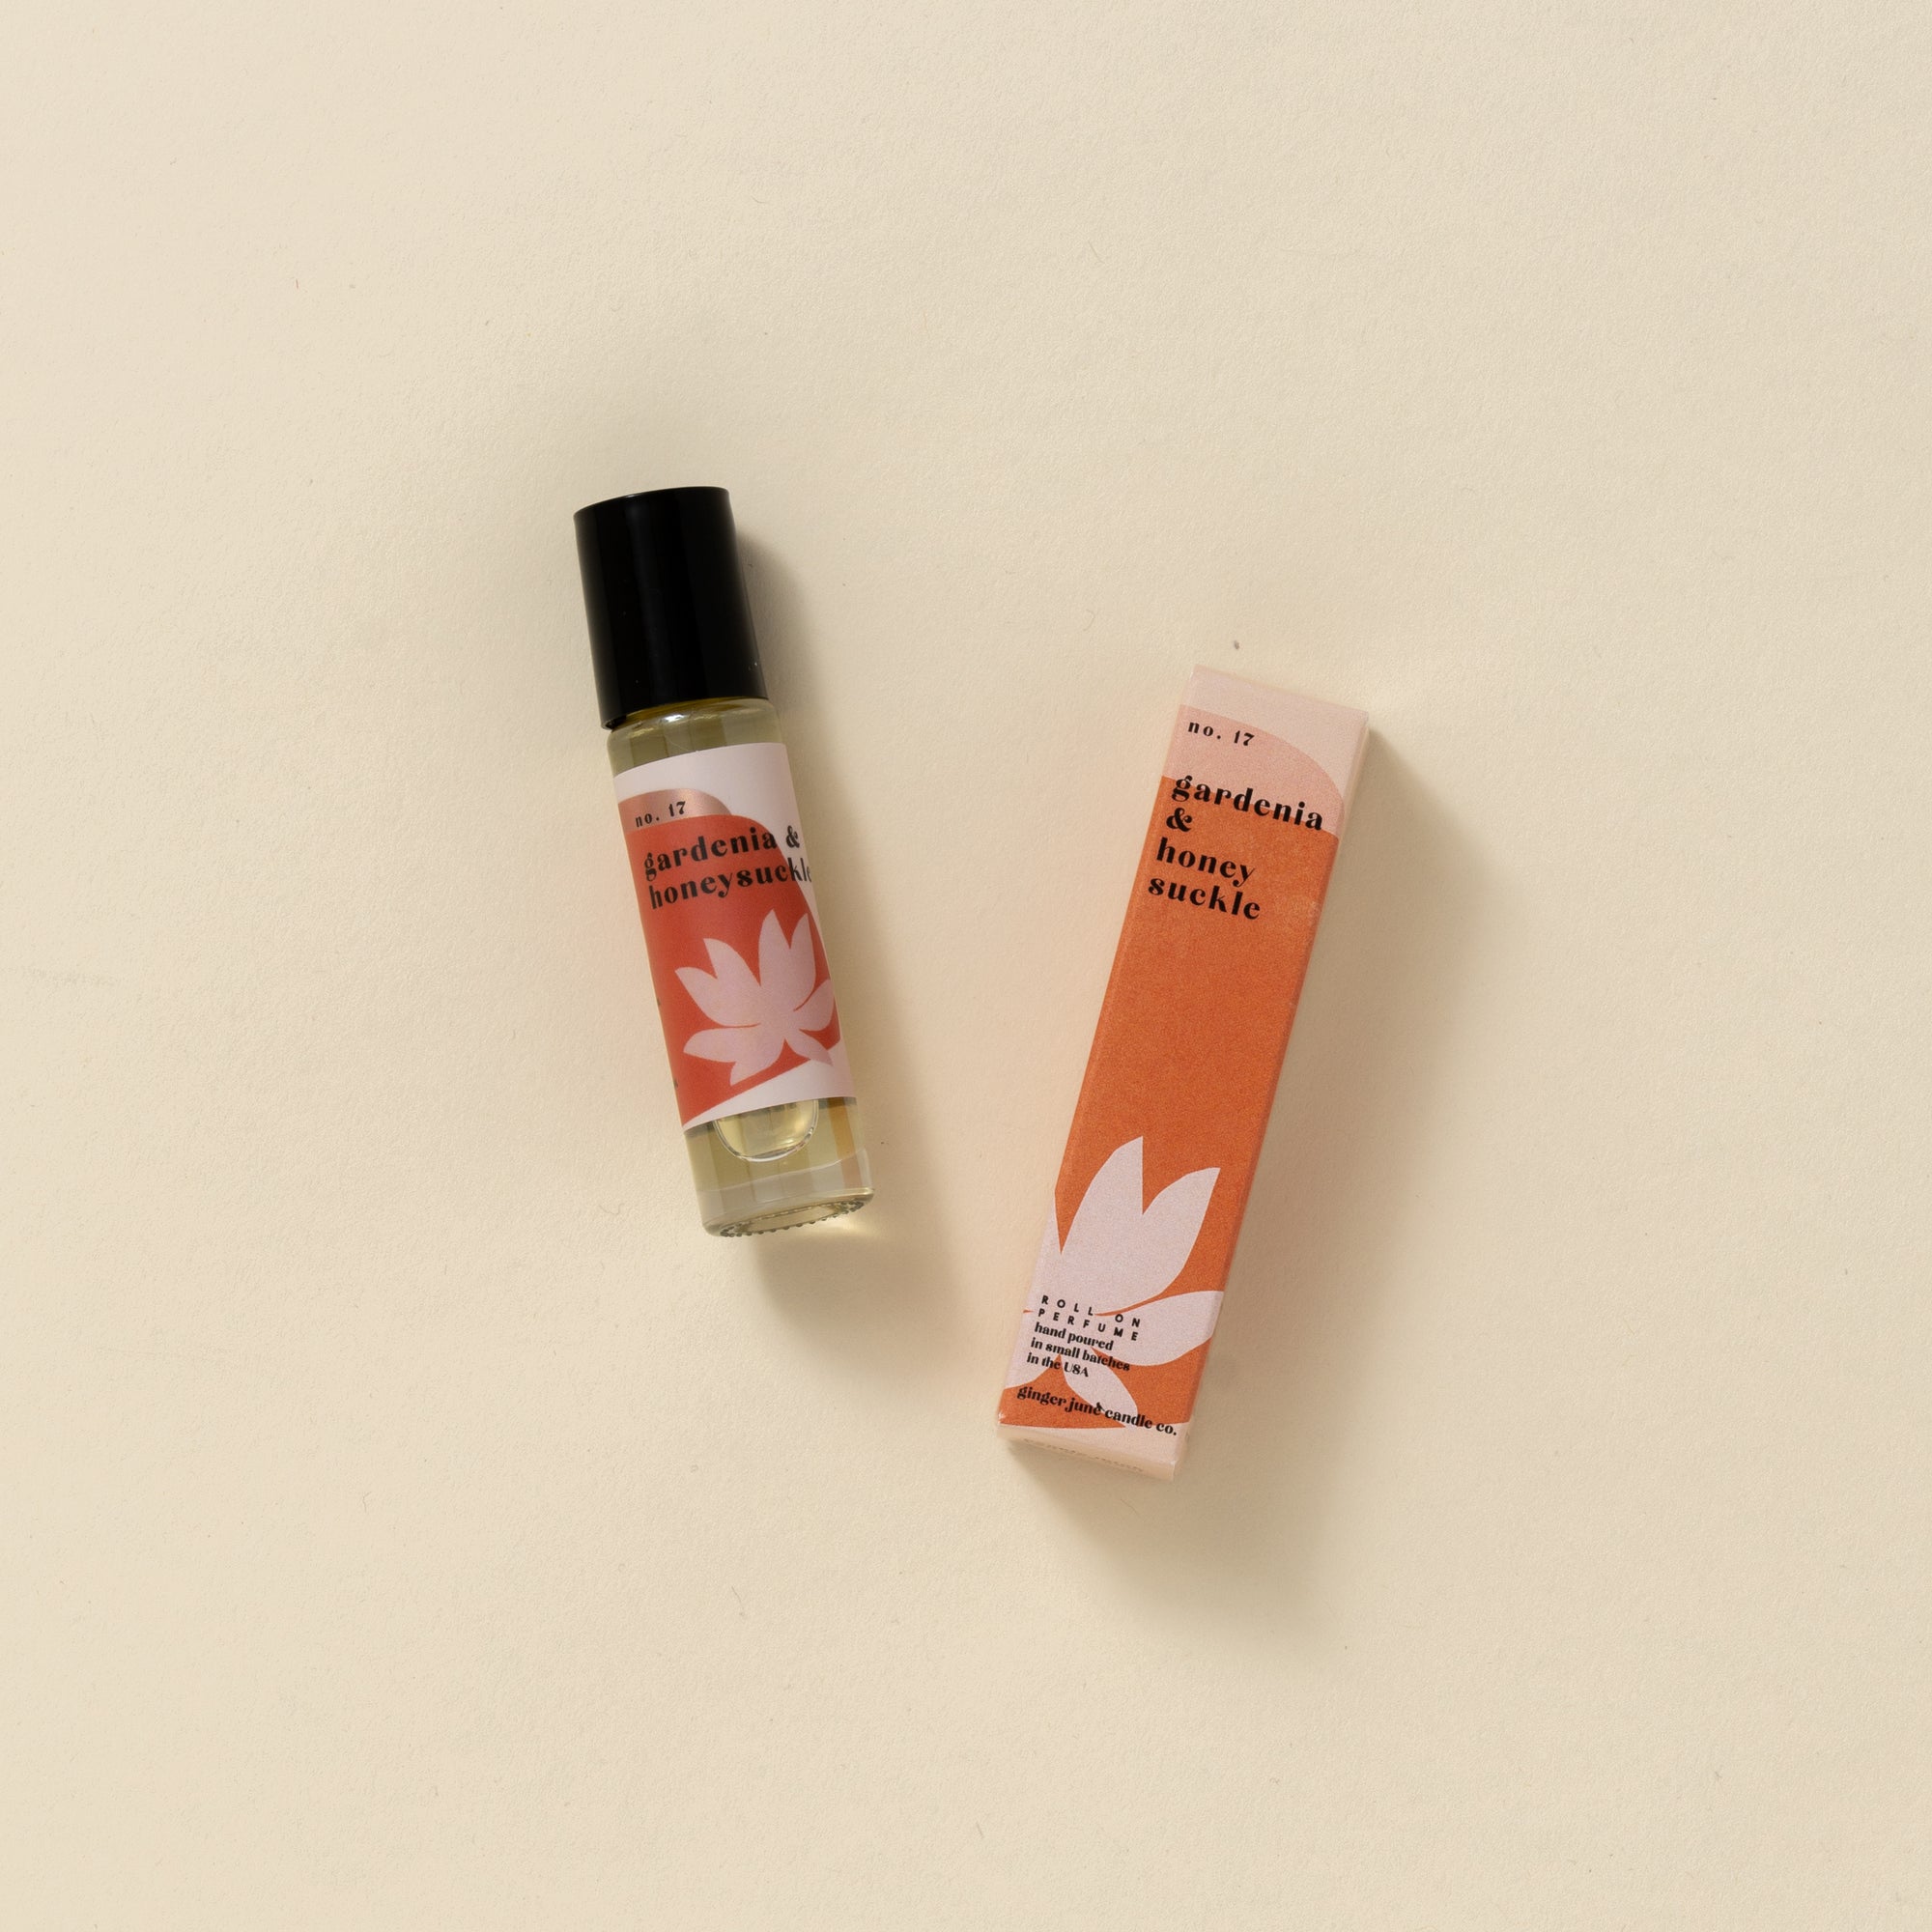 Roll-On Perfume, Gardenia Honeysuckle